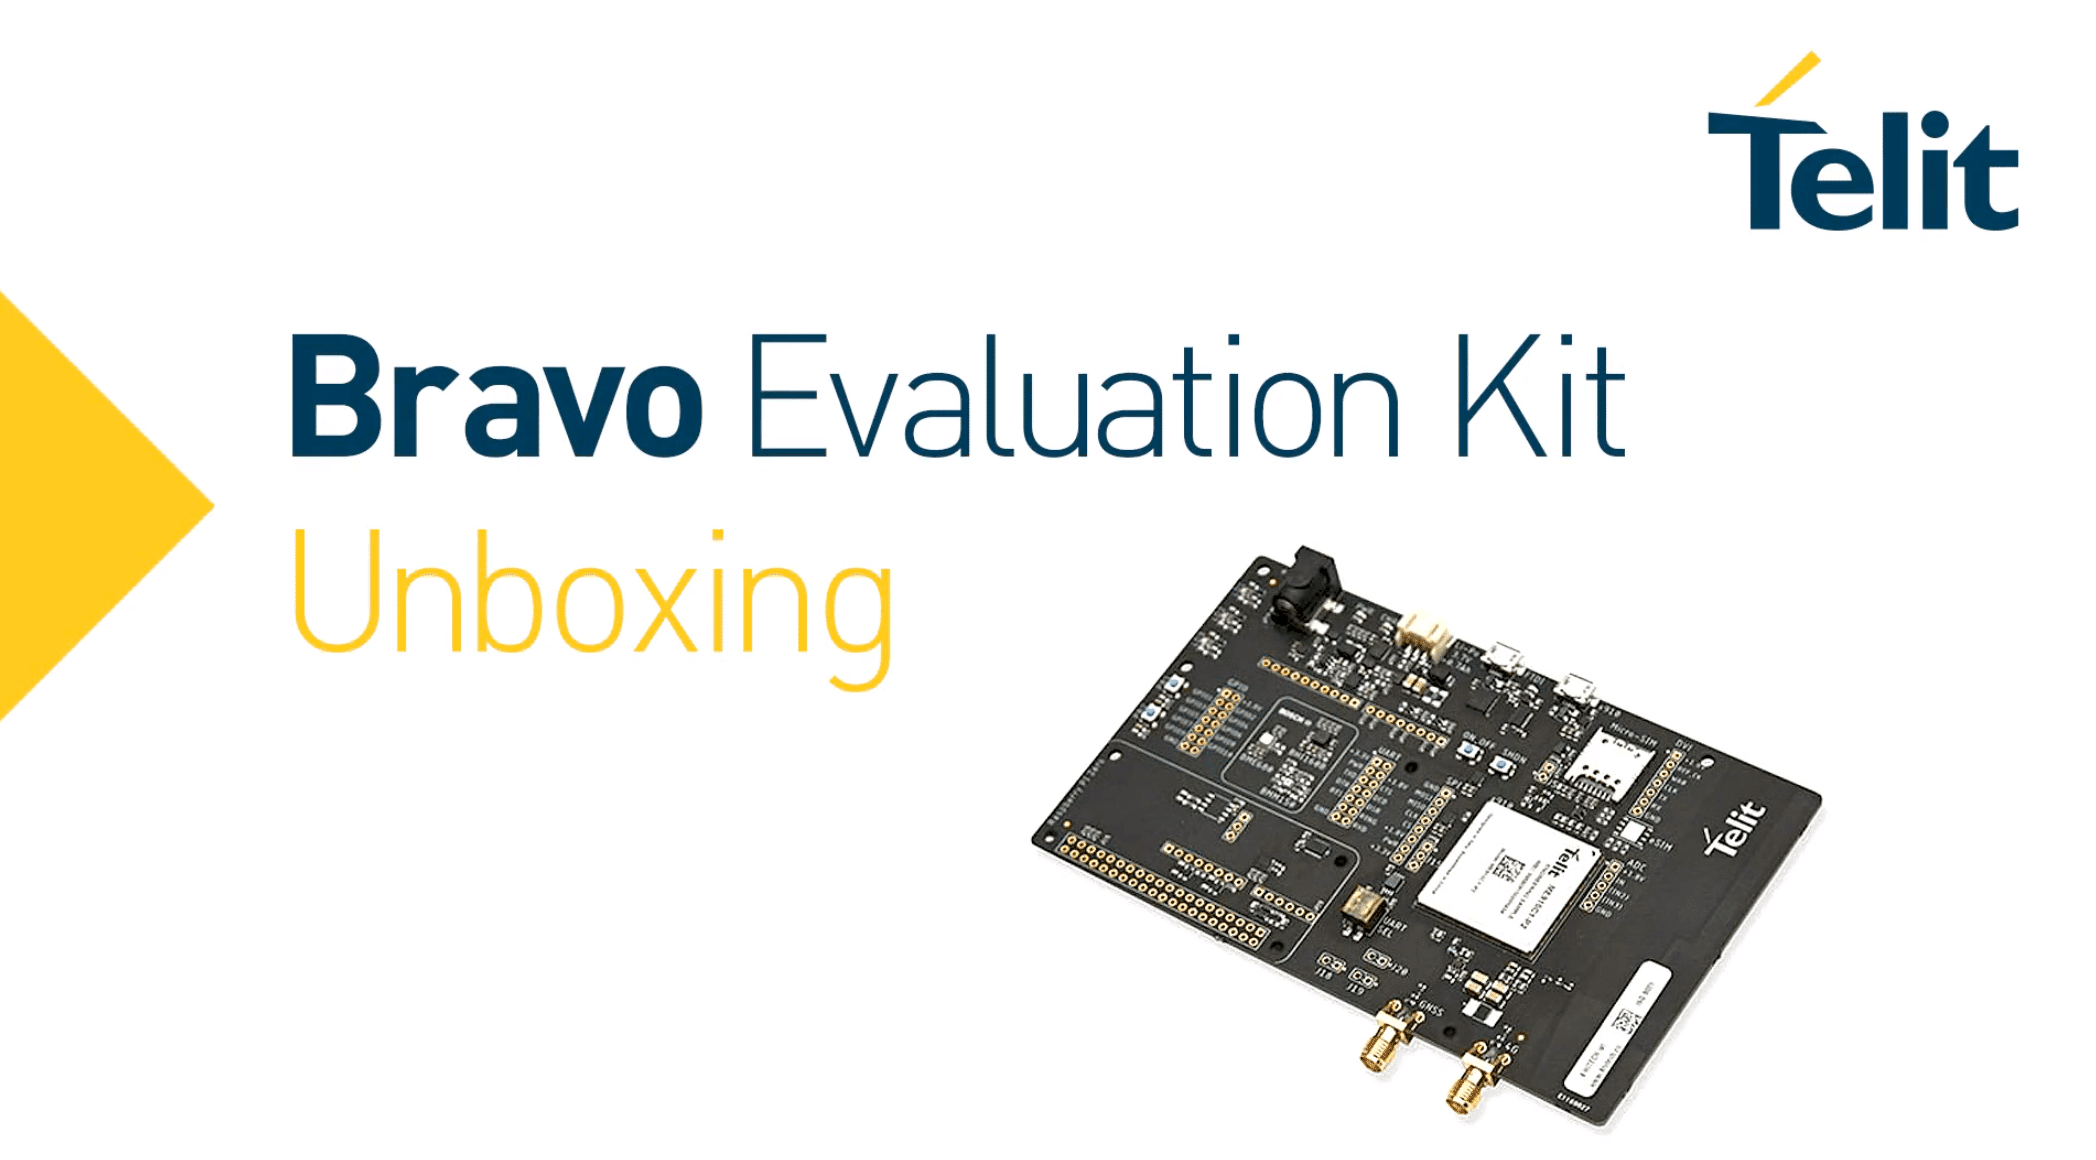 Bravo-Evaluation-Kit-Video-Still